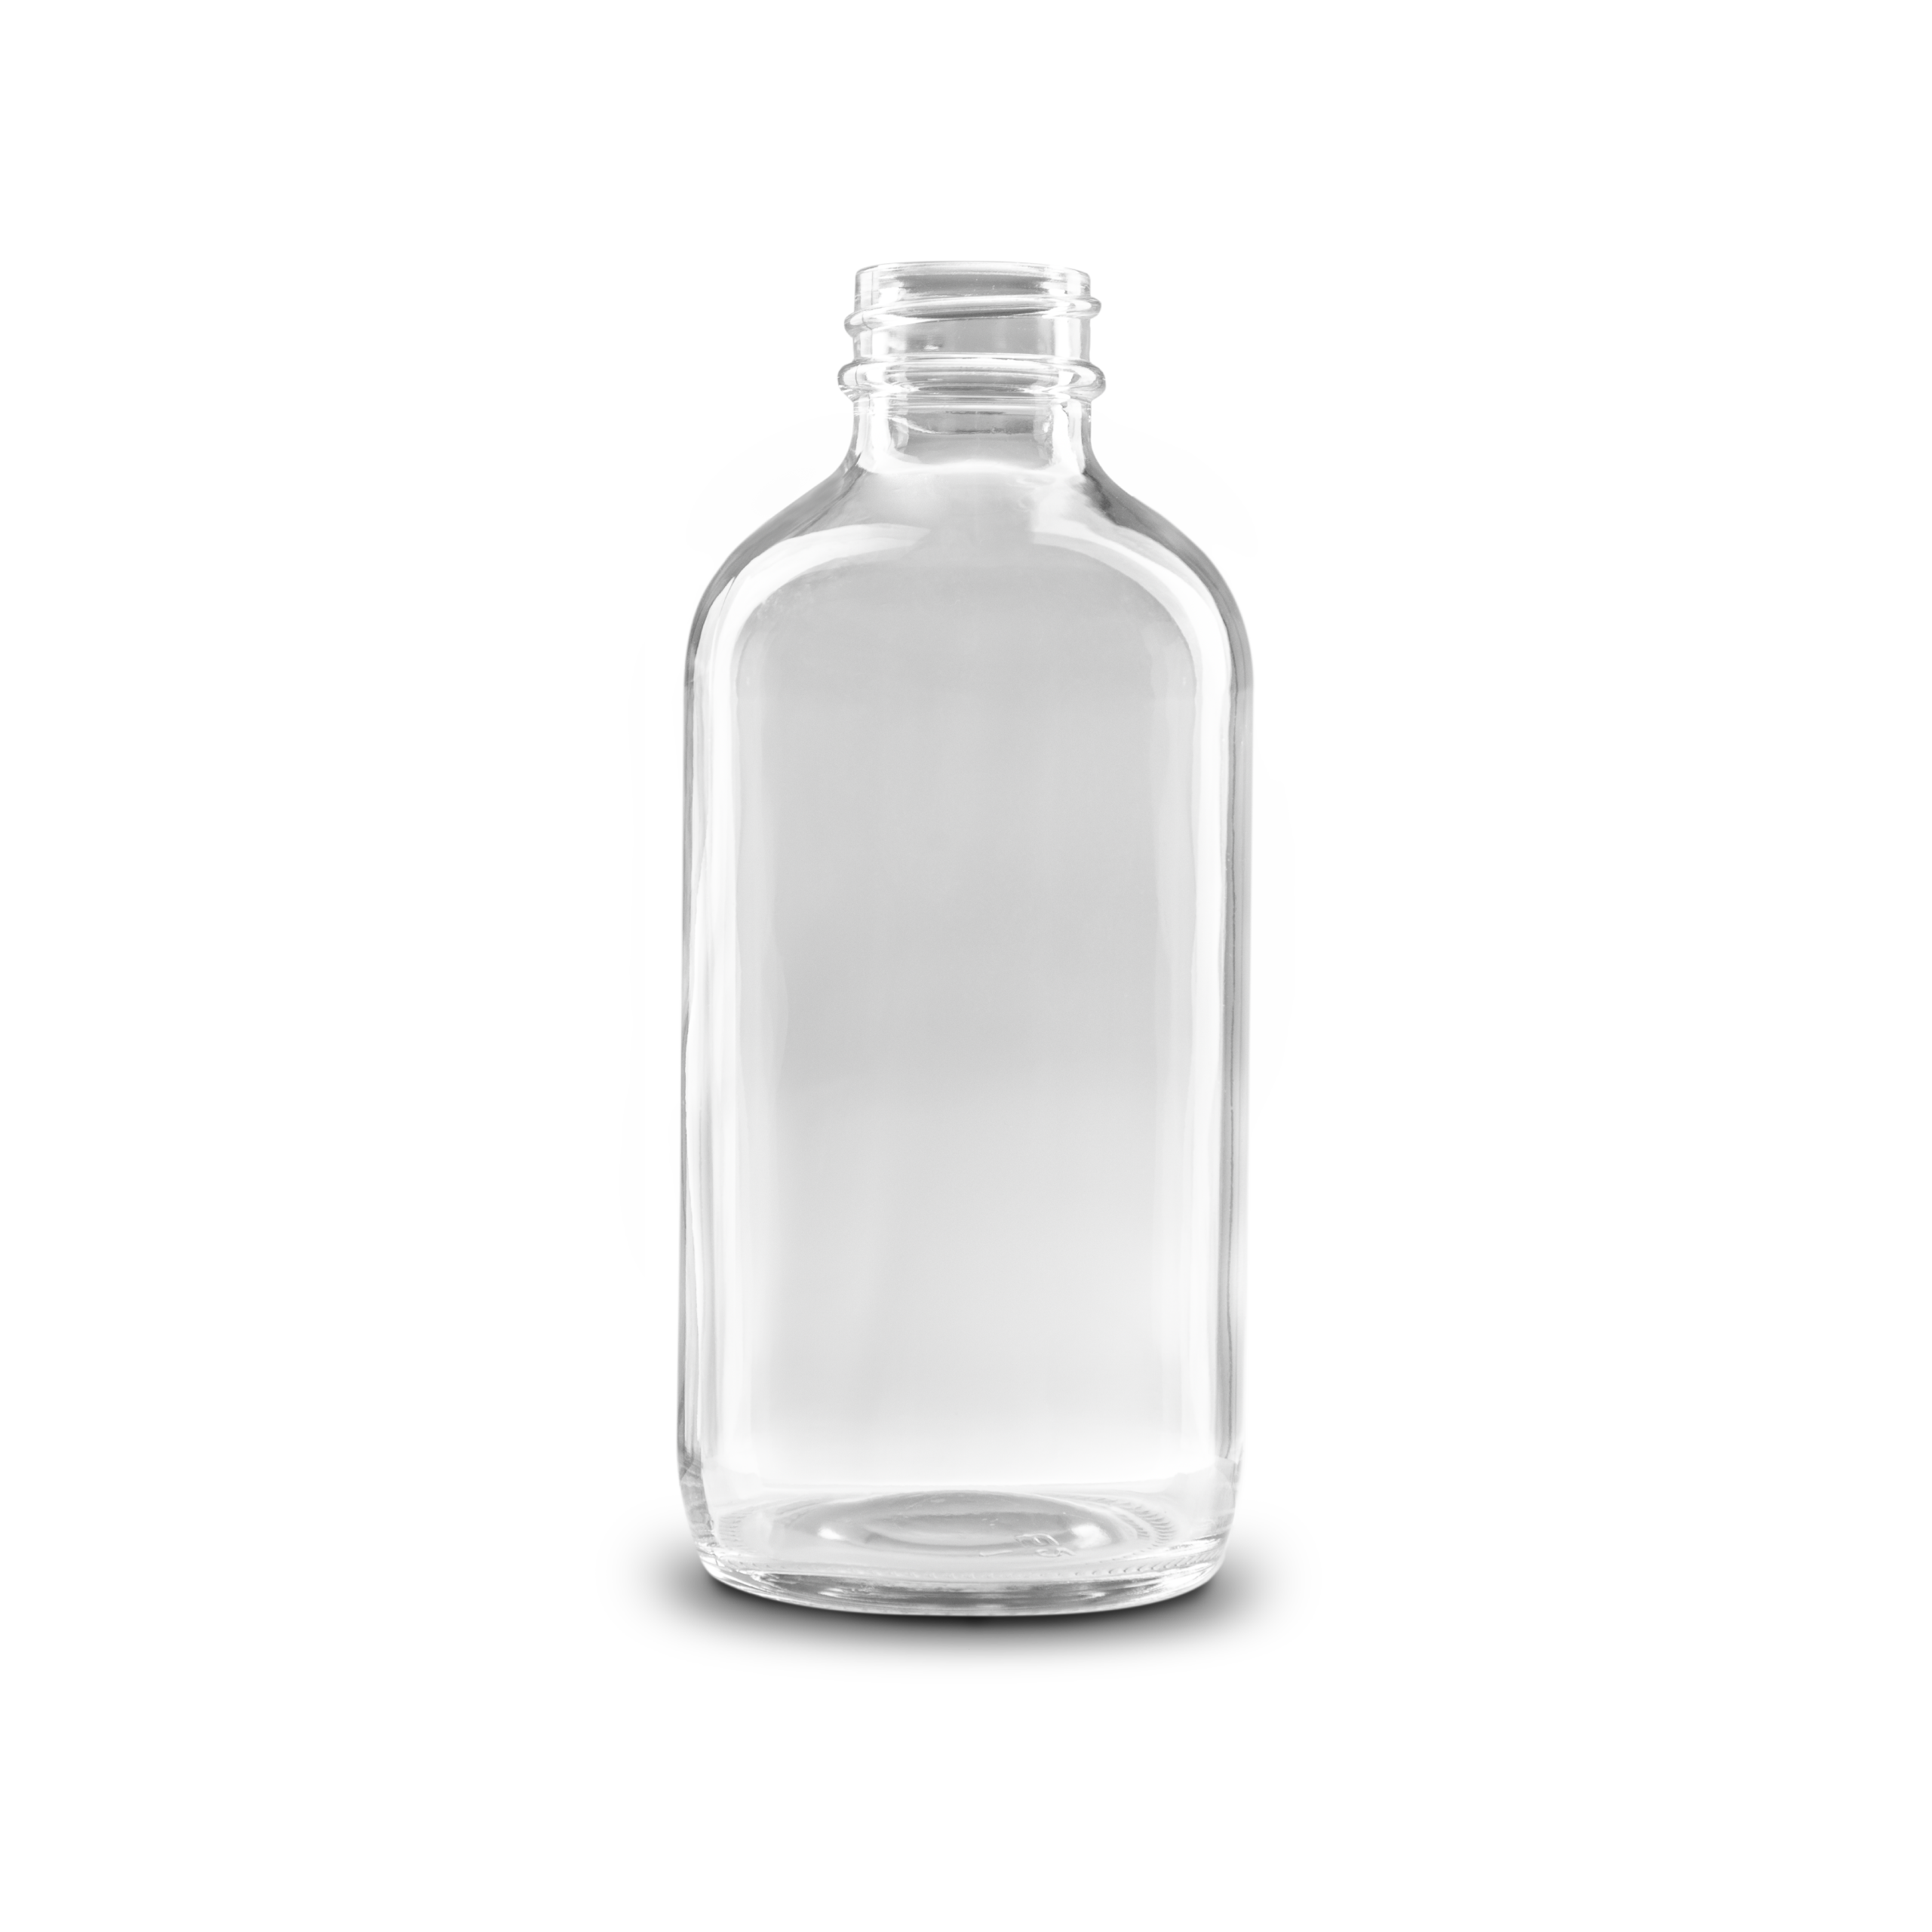 The Bottle Depot - 8 oz Clear Boston Round Glass Bottle